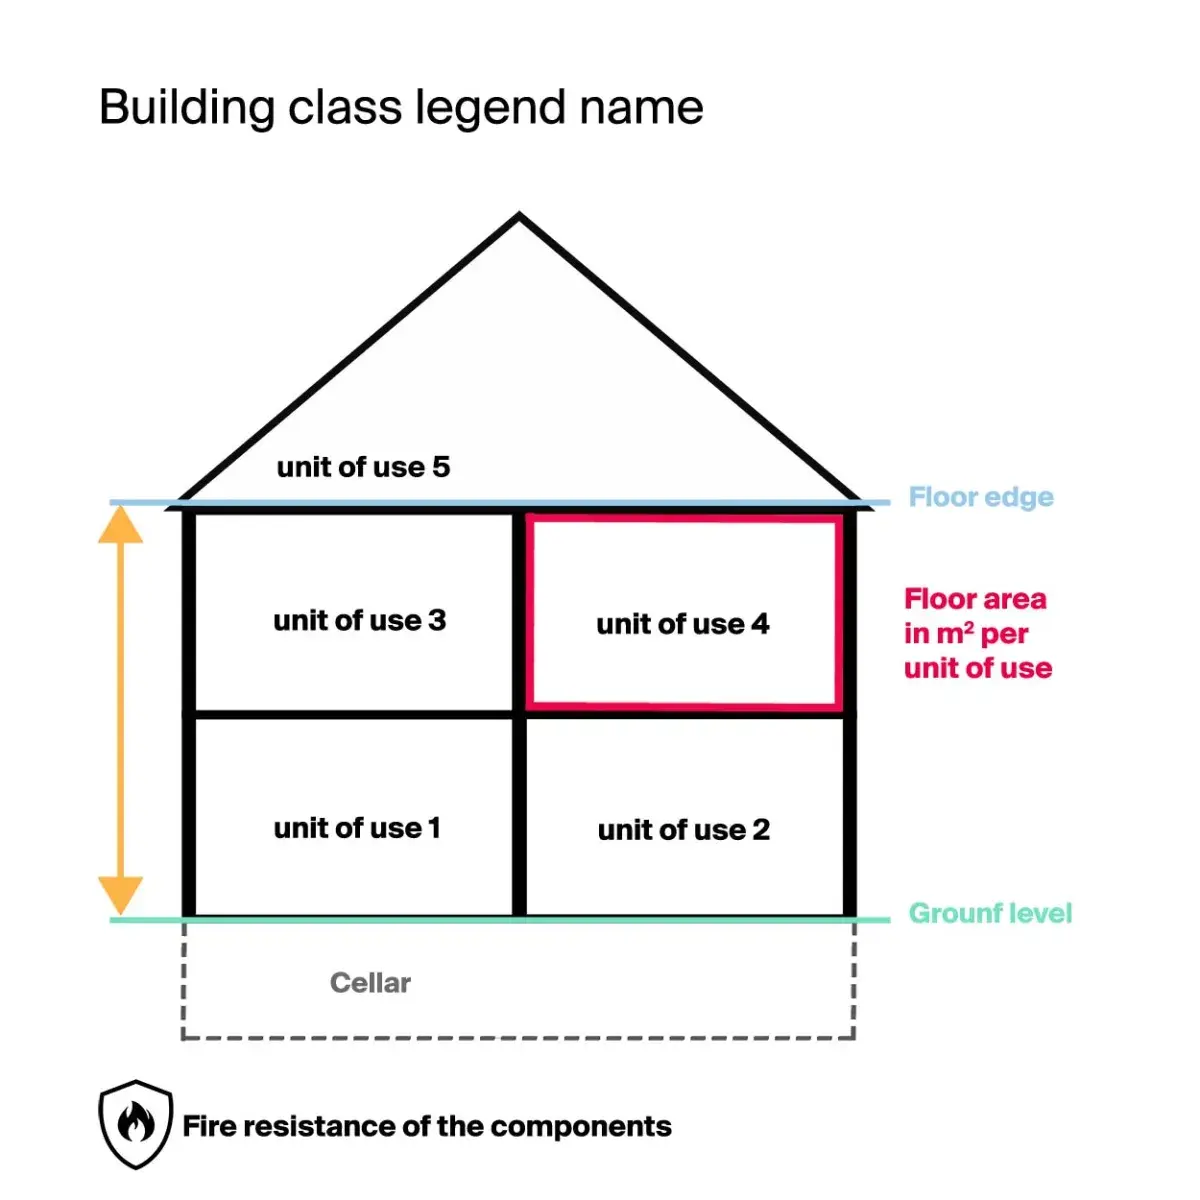 Building class legend name